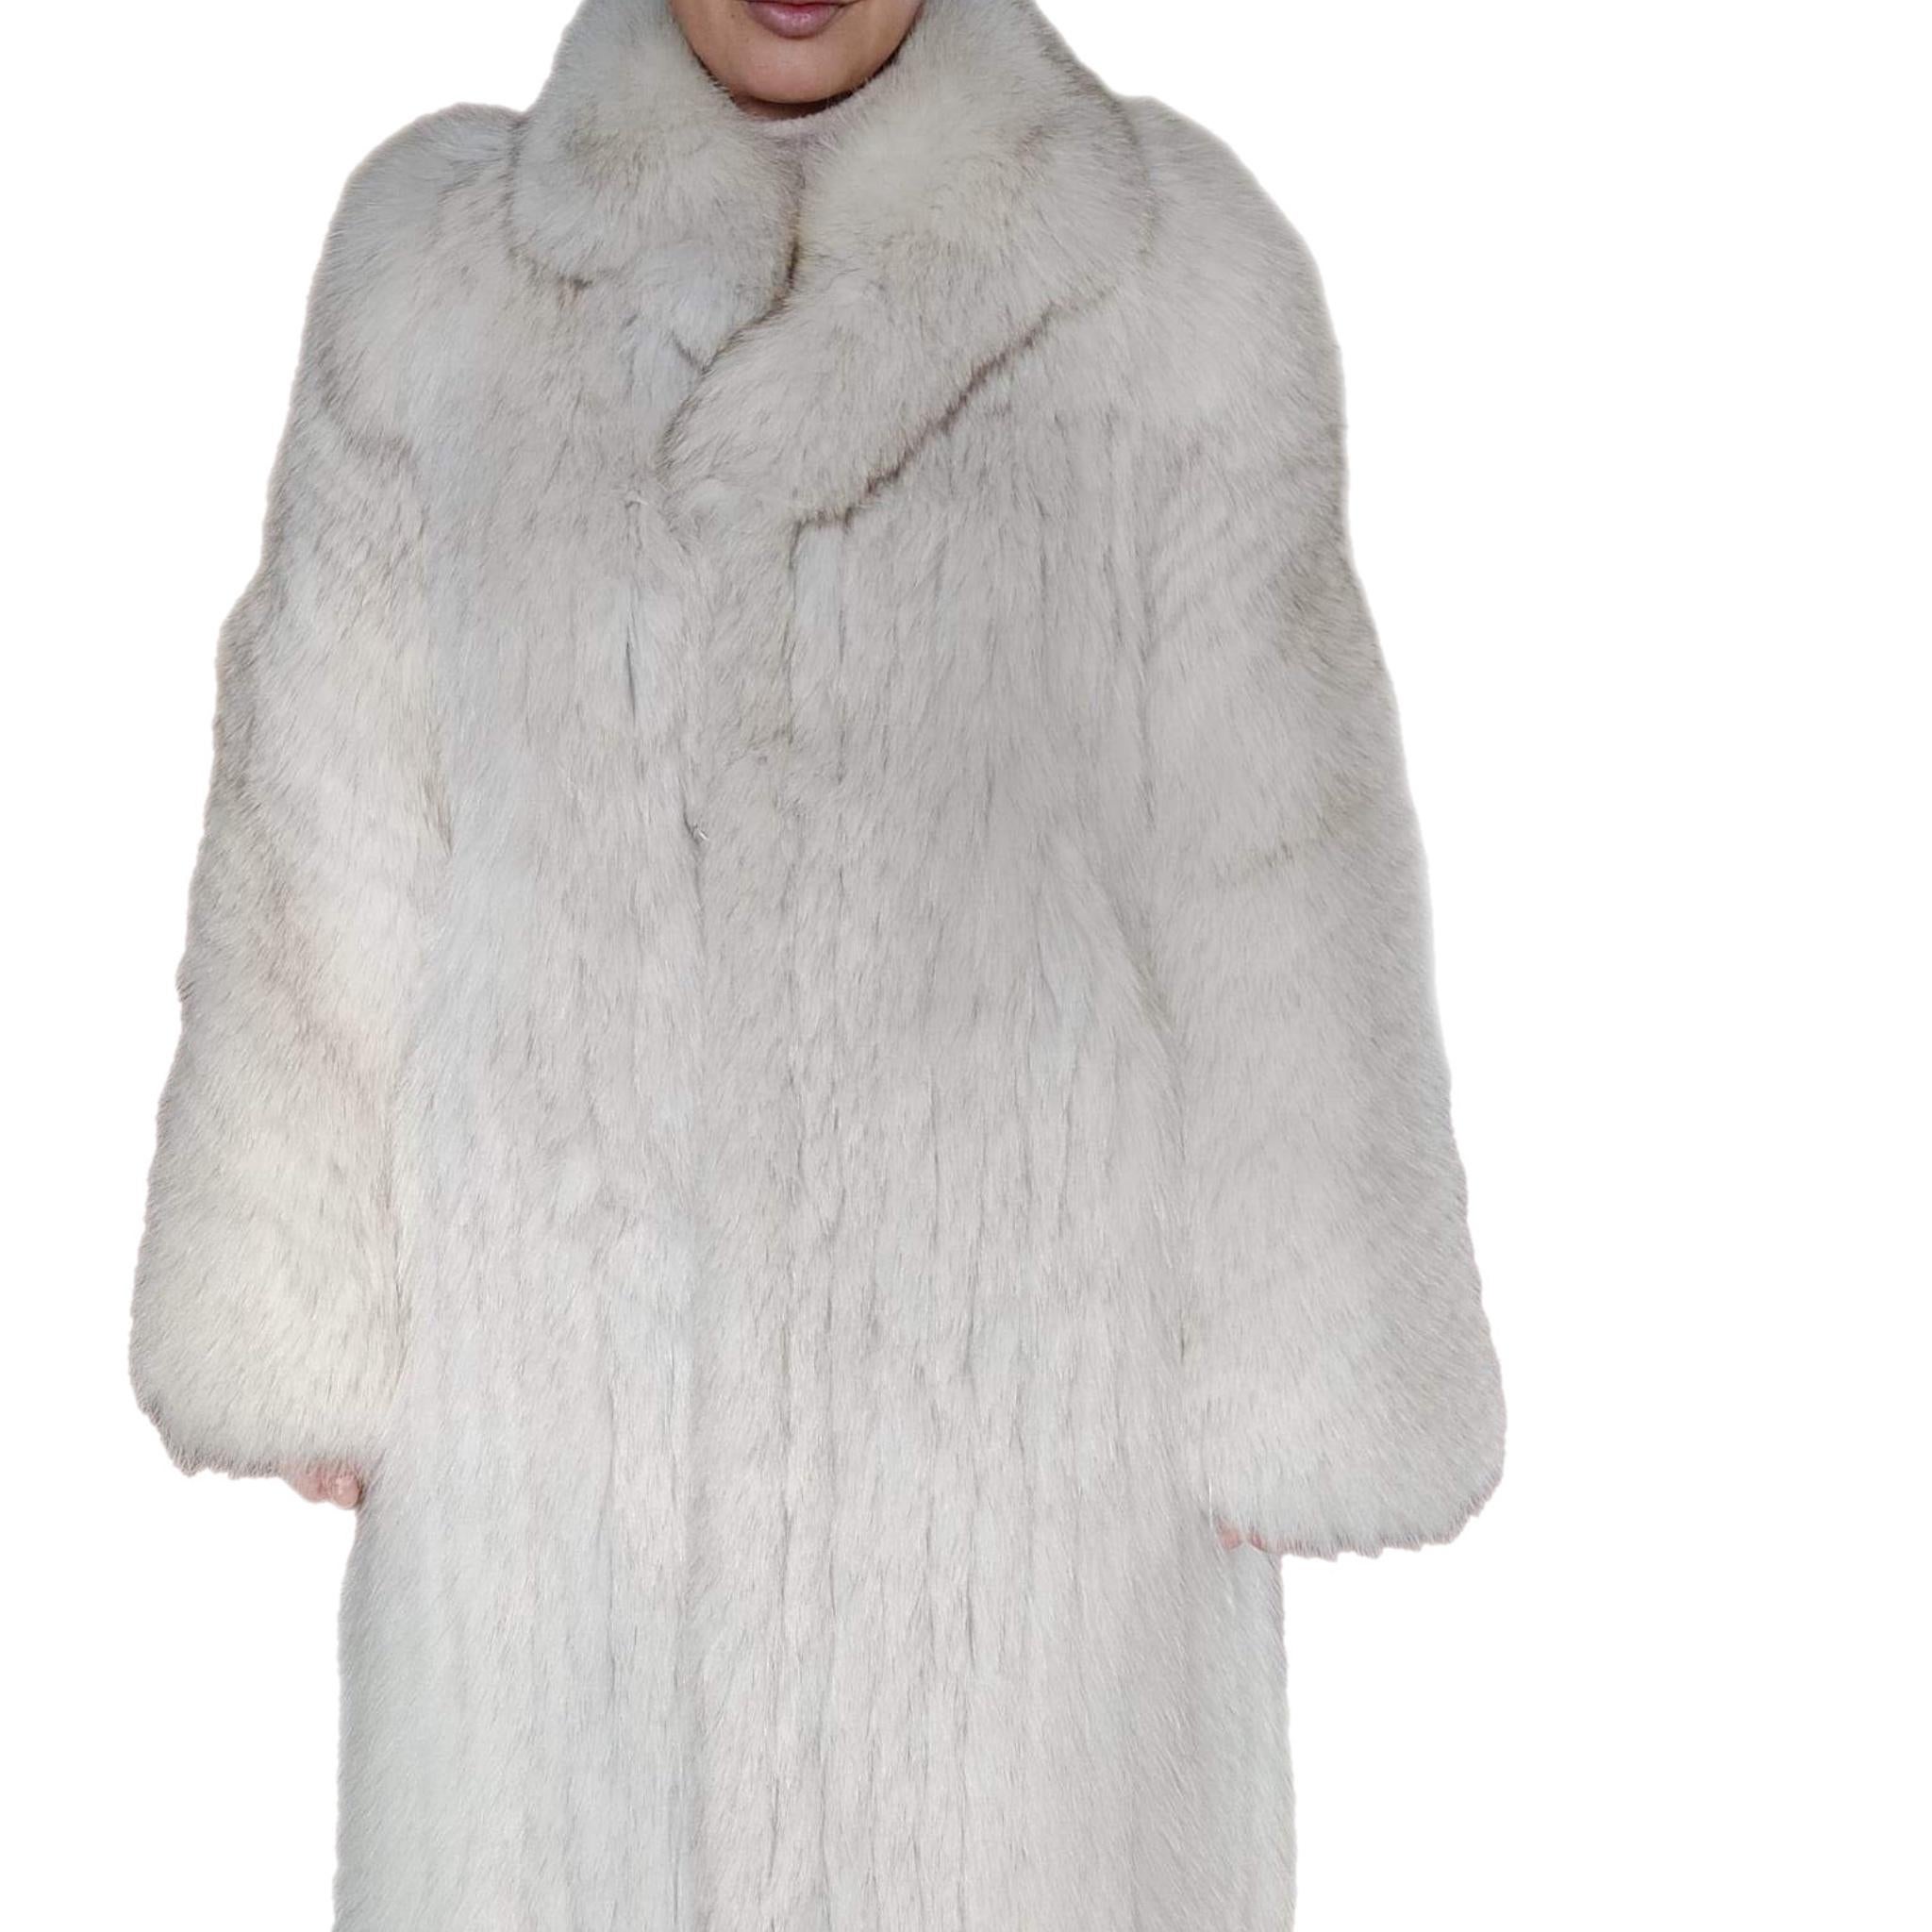 Brand new lightweight saga fox fur coat size 8  3